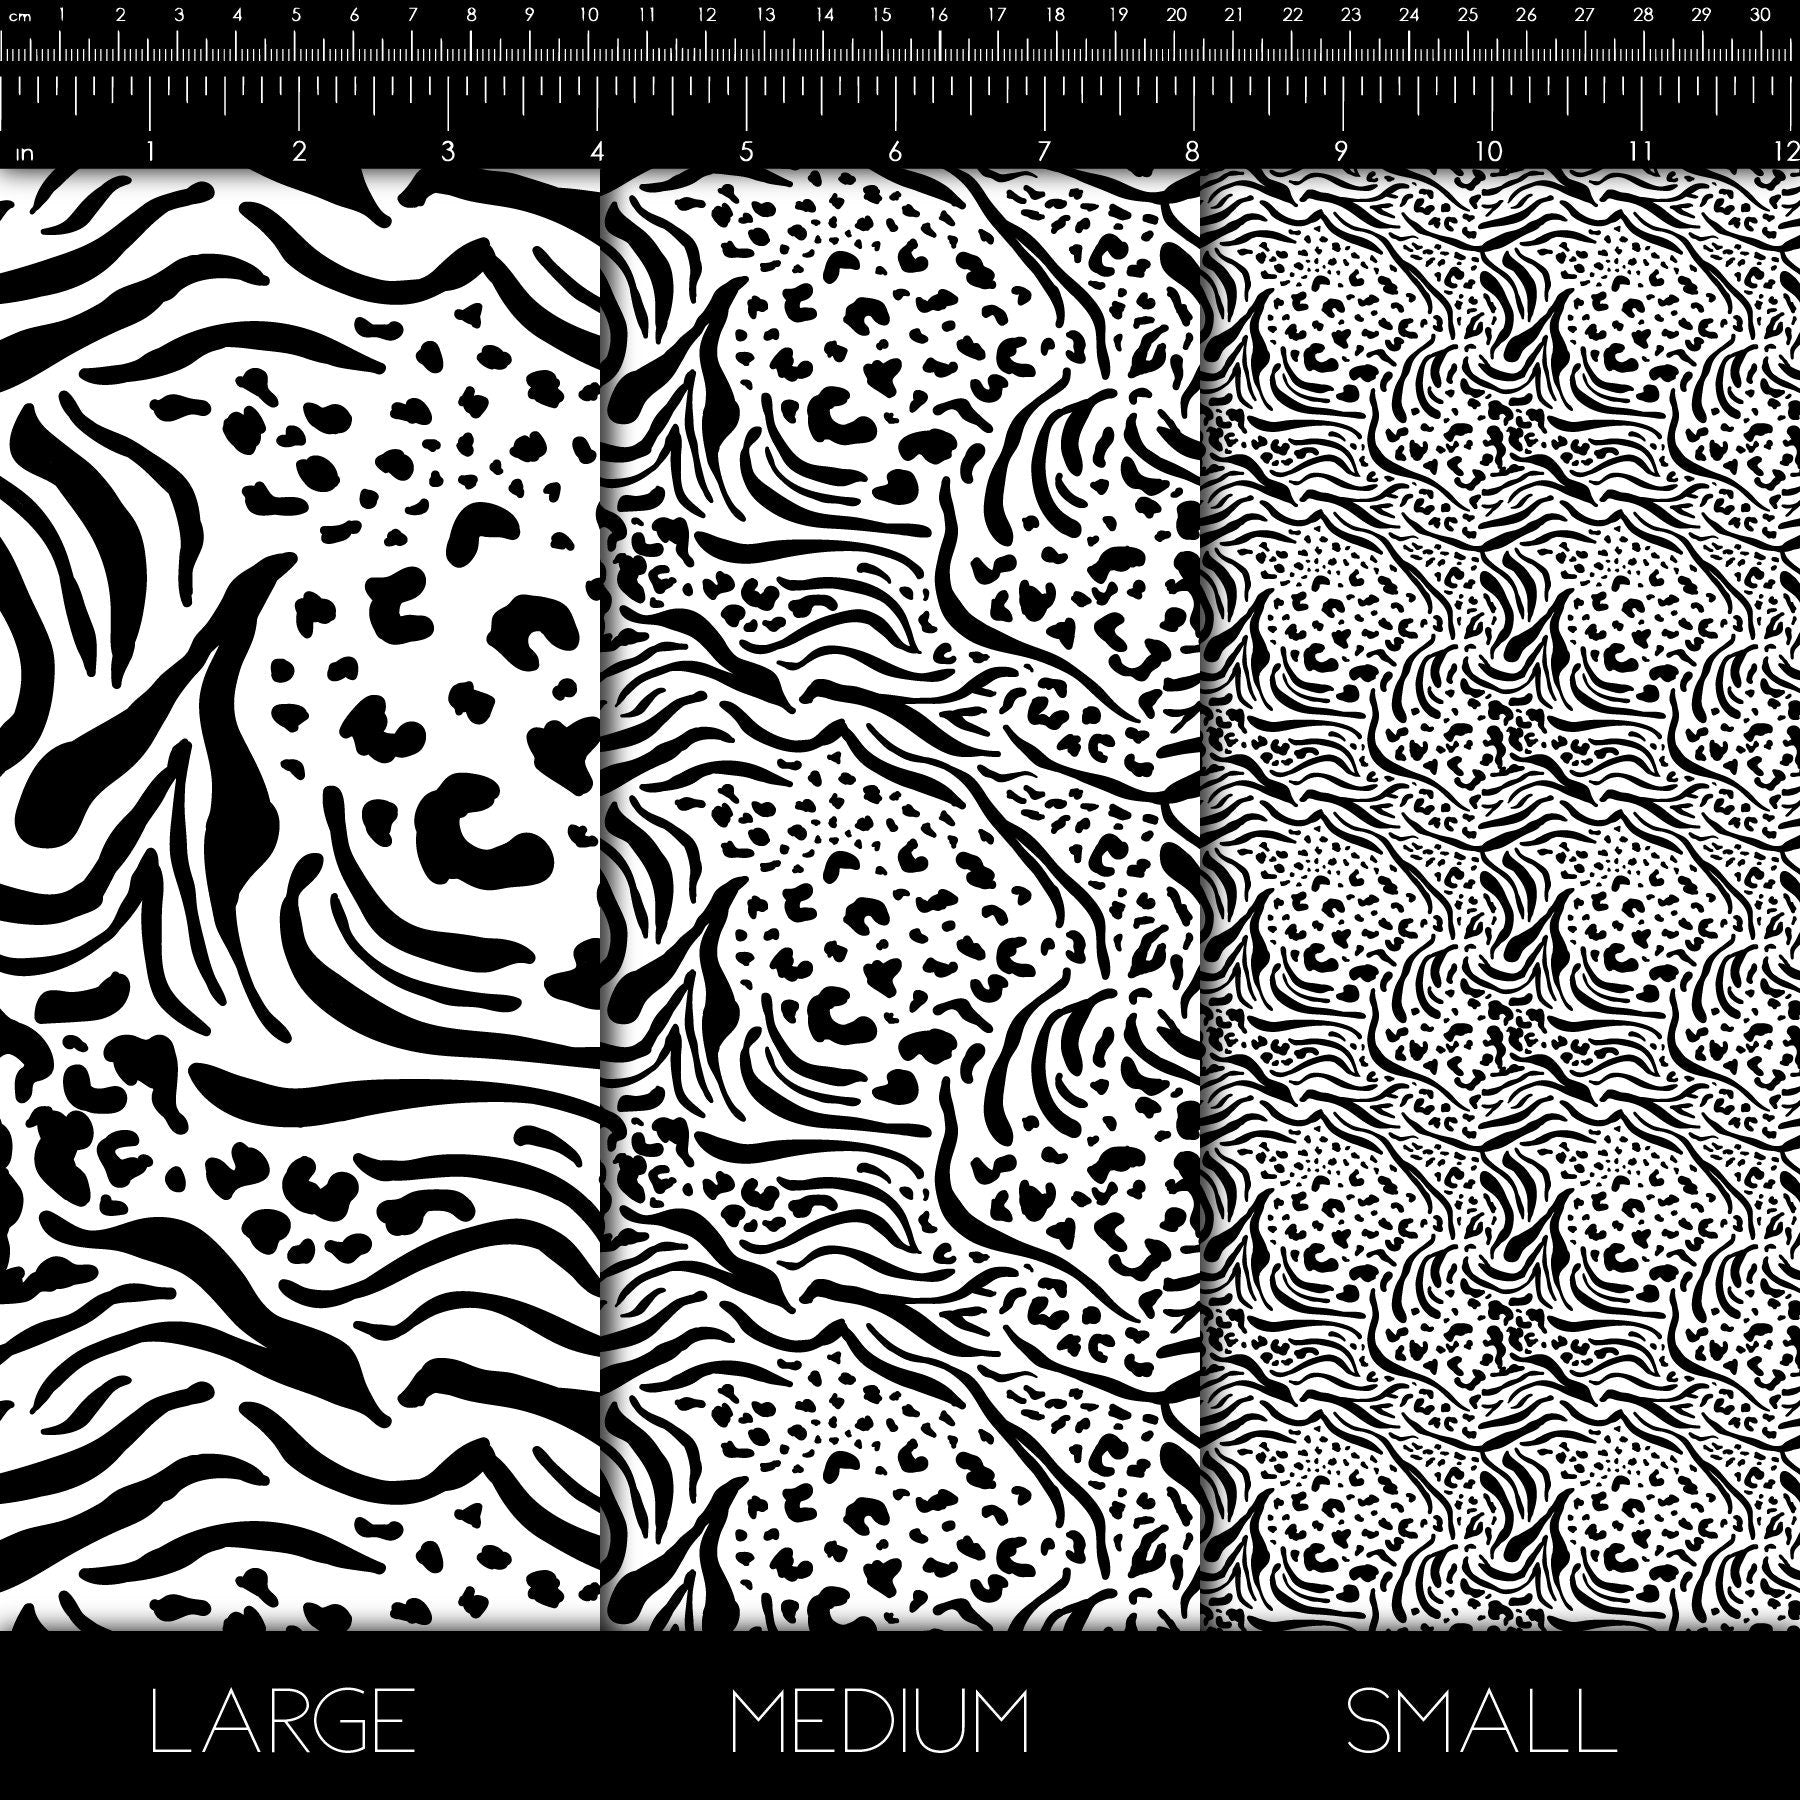 Vinyl - Black And White Vinyl - HTV - Heat Transfer Vinyl - Adhesive Vinyl - Sublimation - Flood Sheet - Paper - Black and White - Cheetah